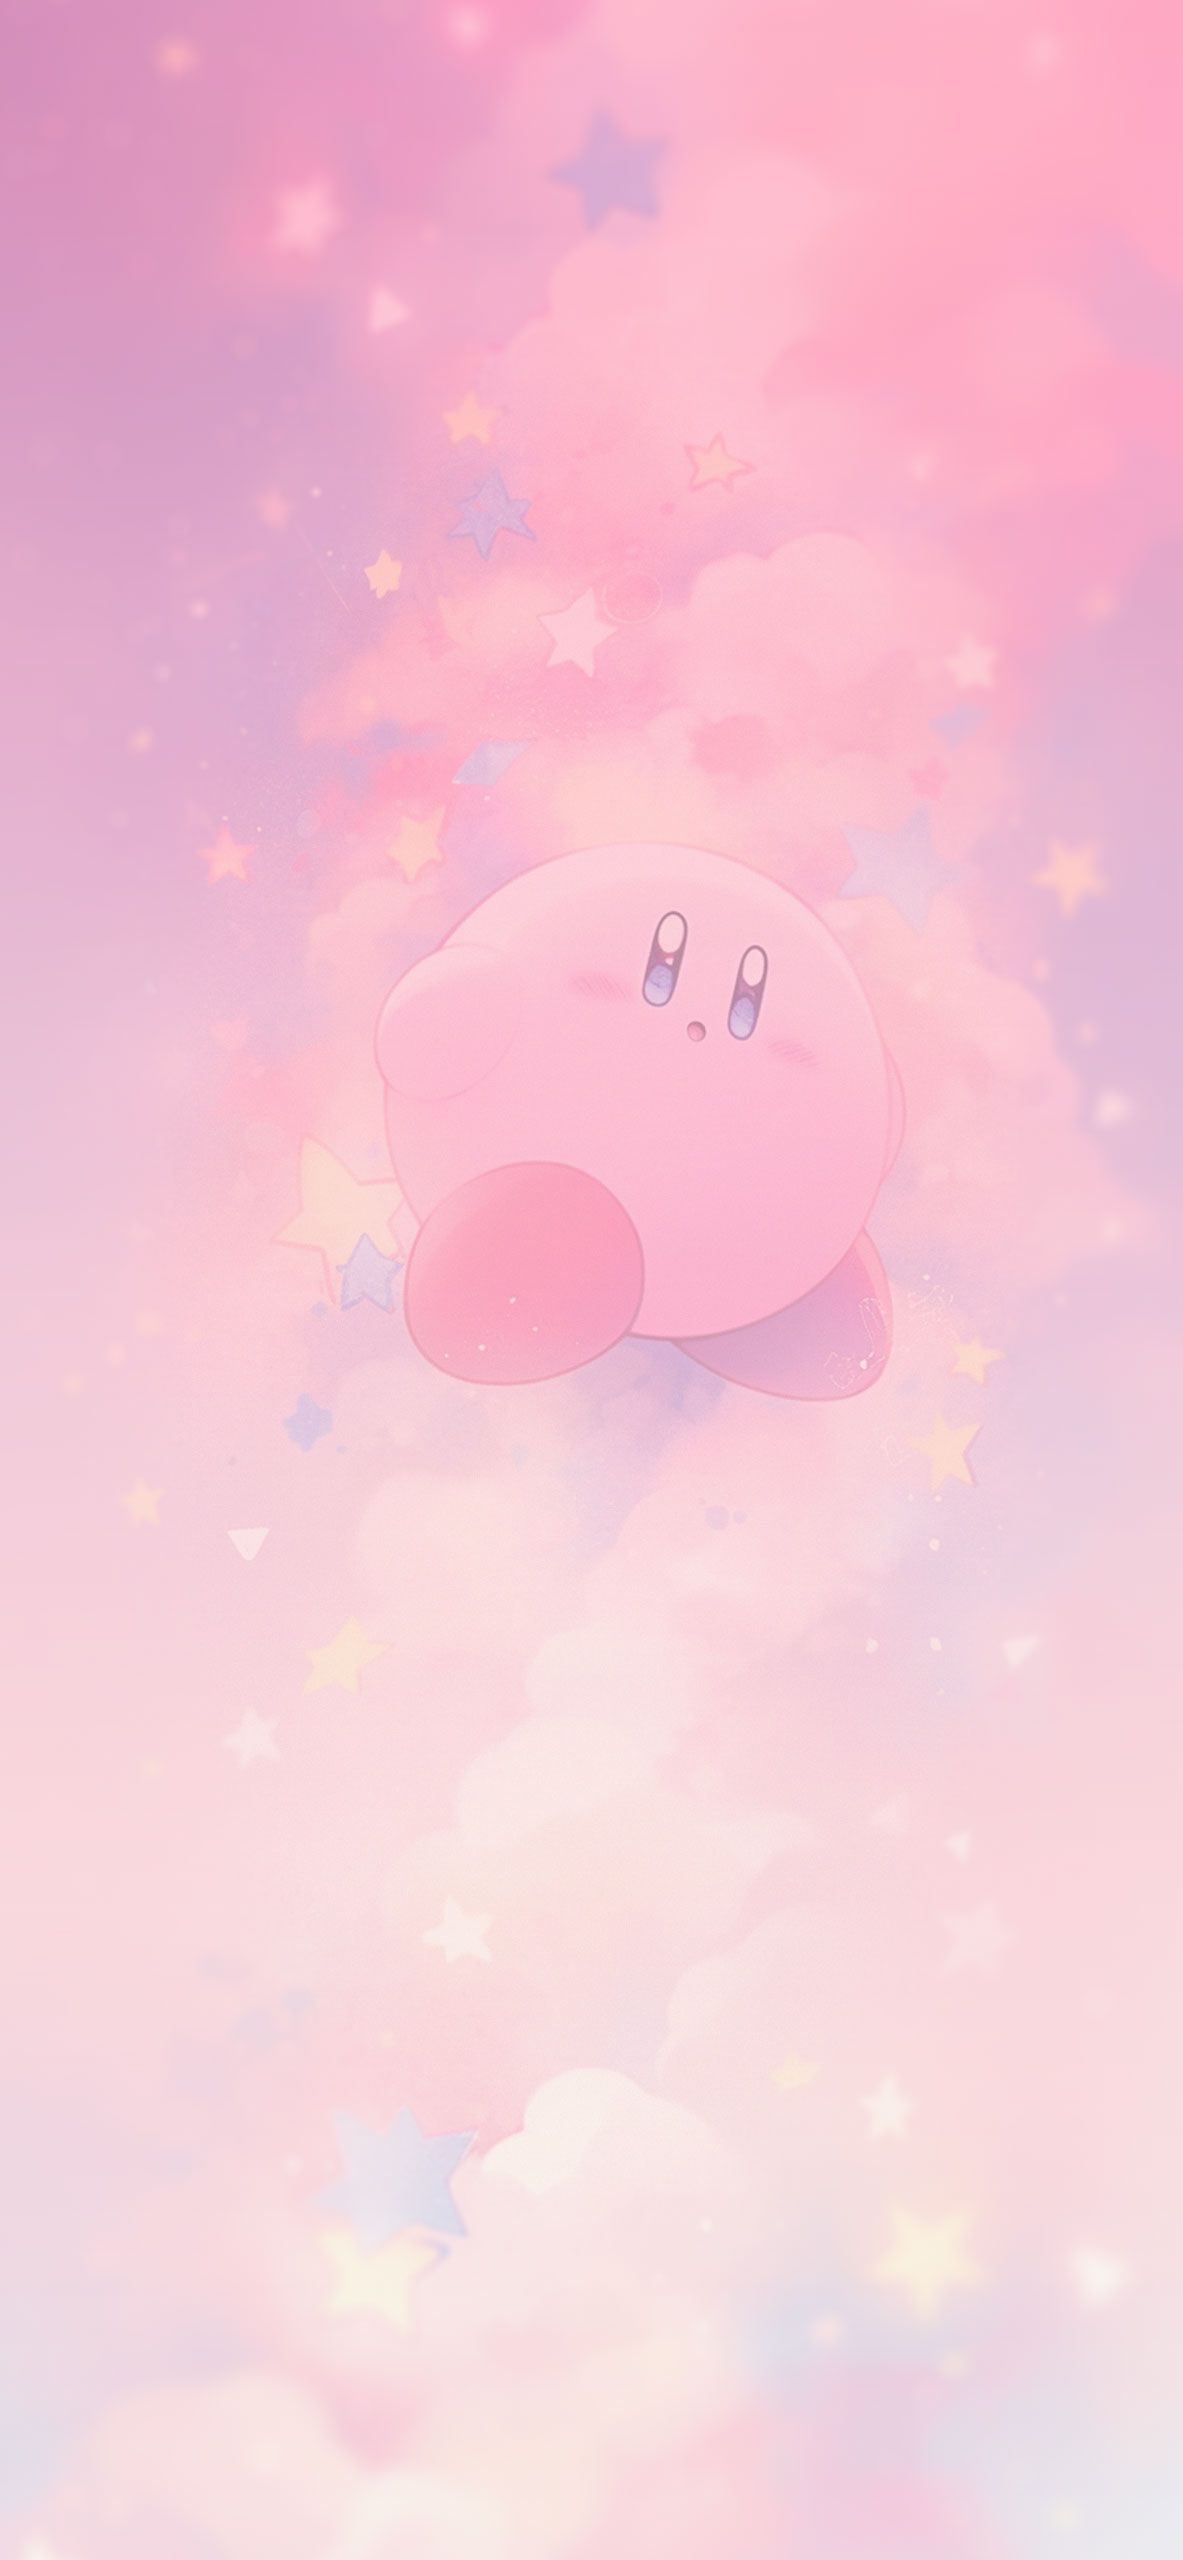 Kirby in the sky - Stars